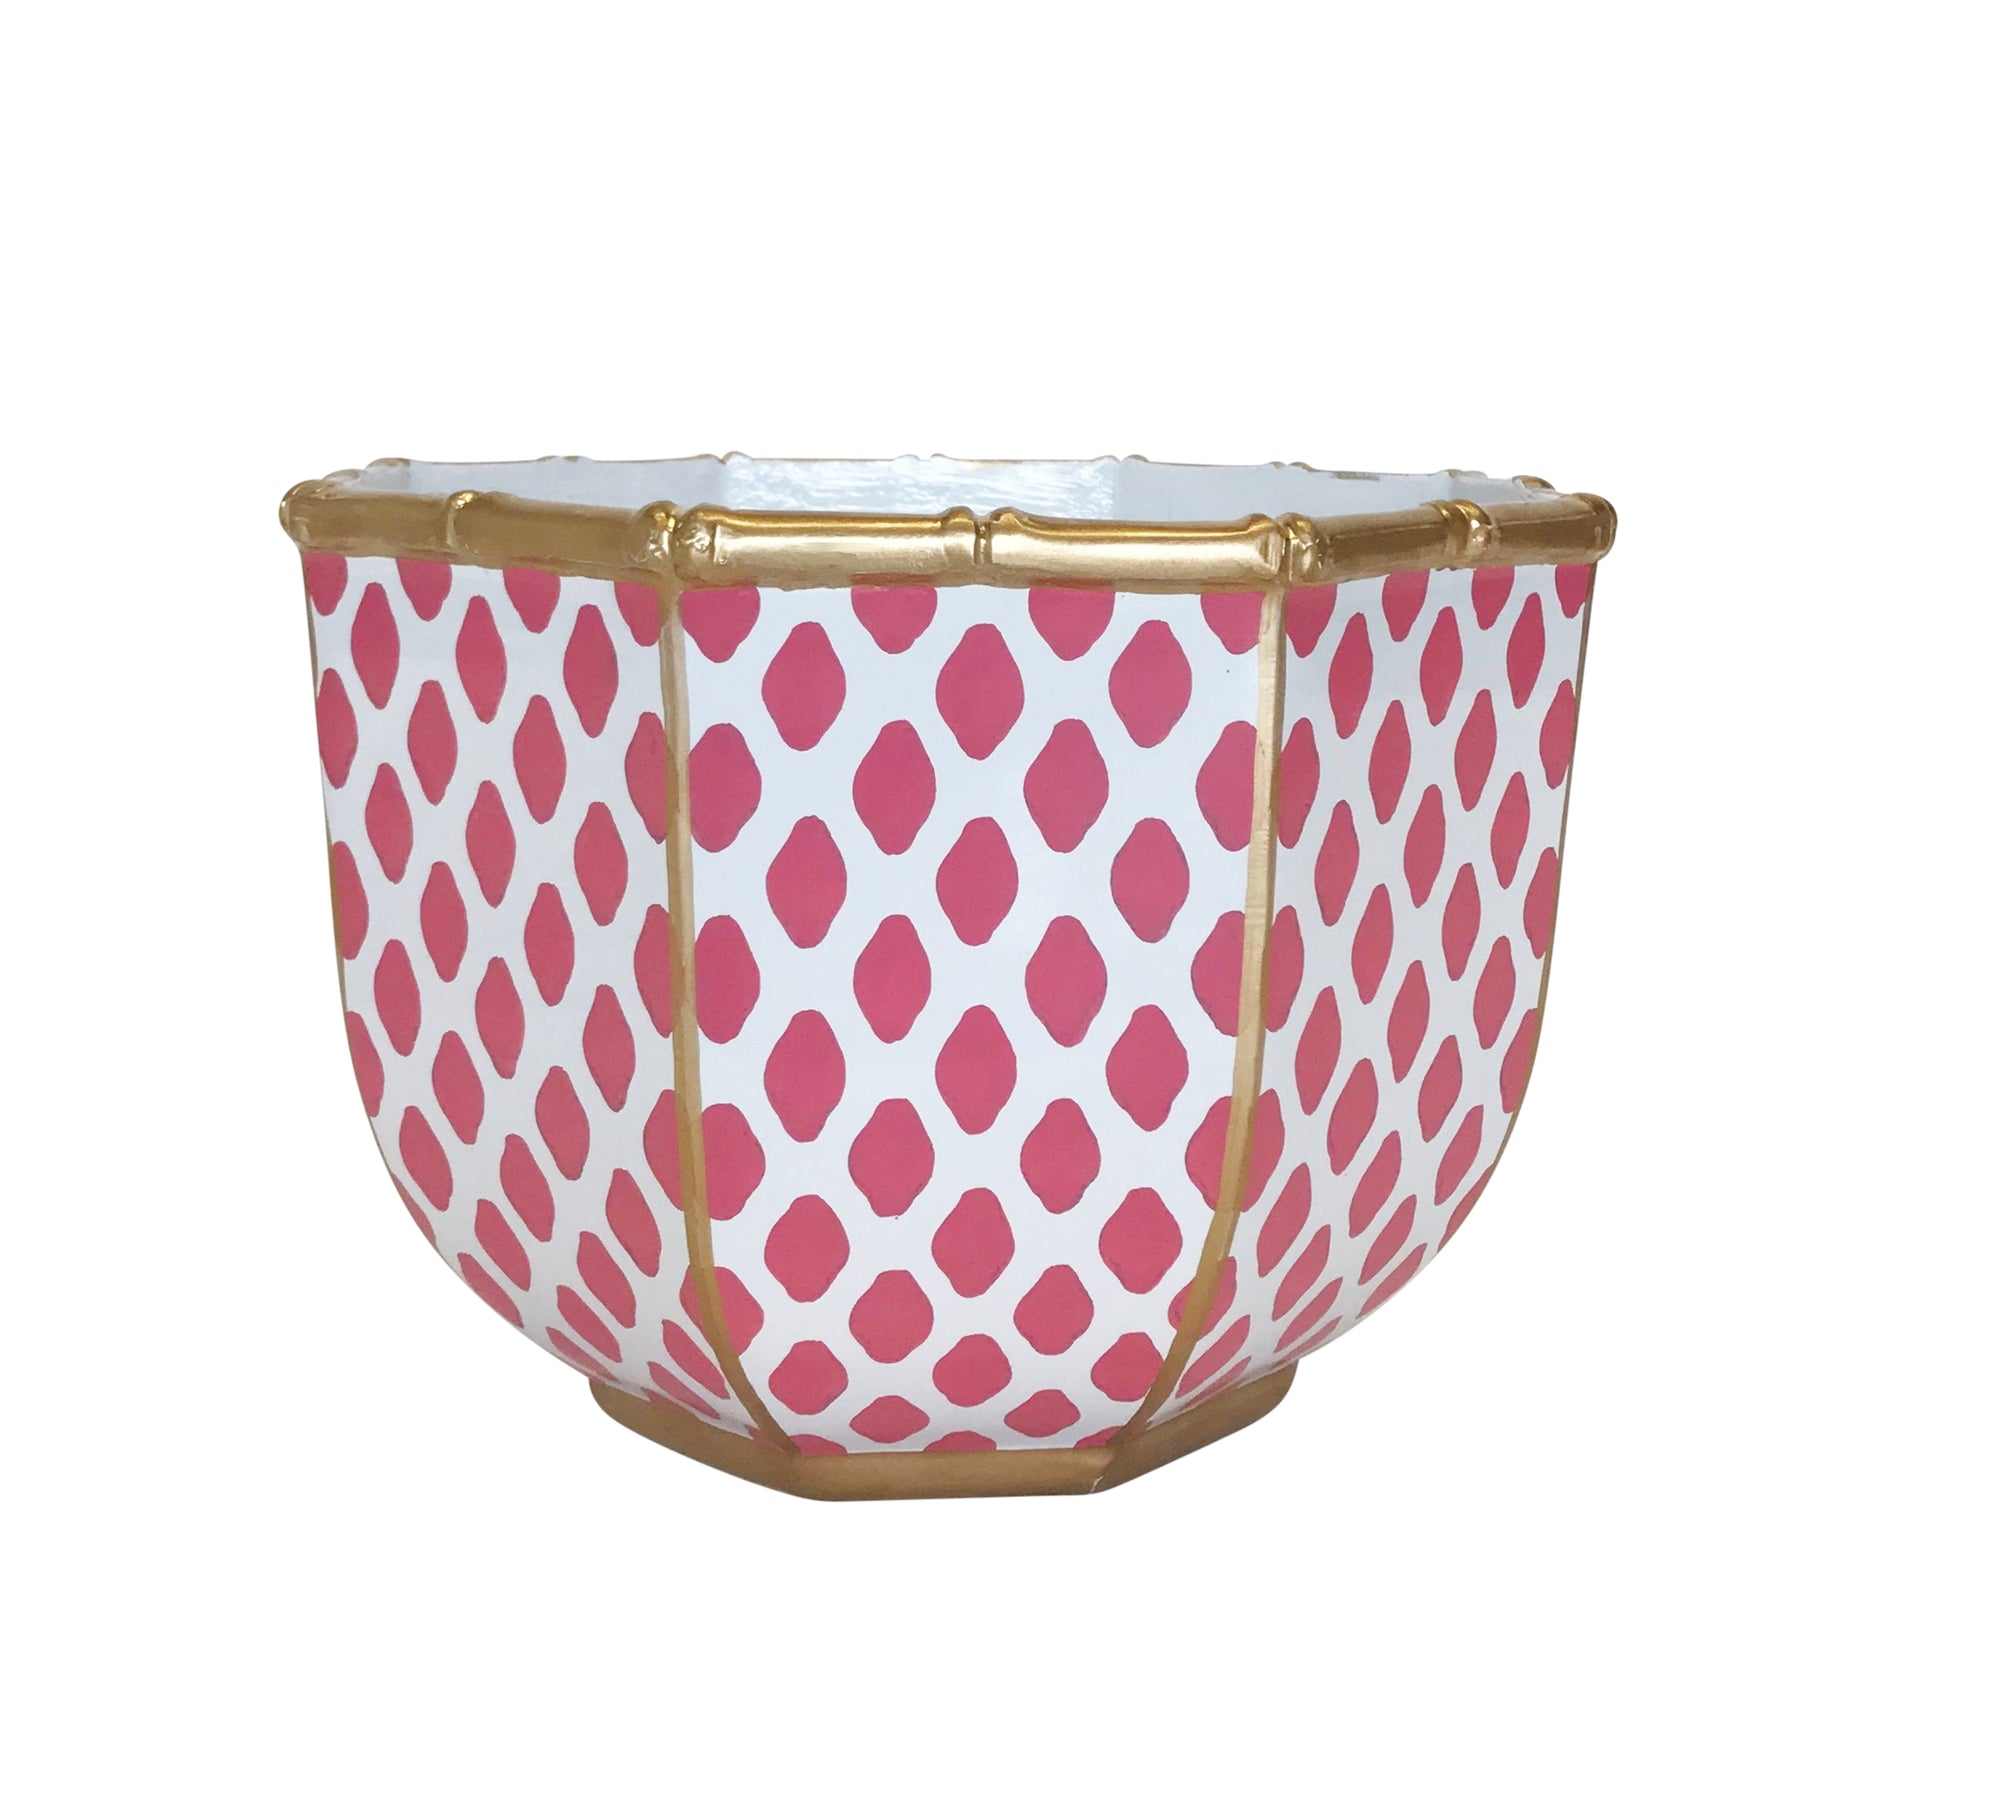 Dana Gibson Bamboo Bowl in Parsi Pink, Large